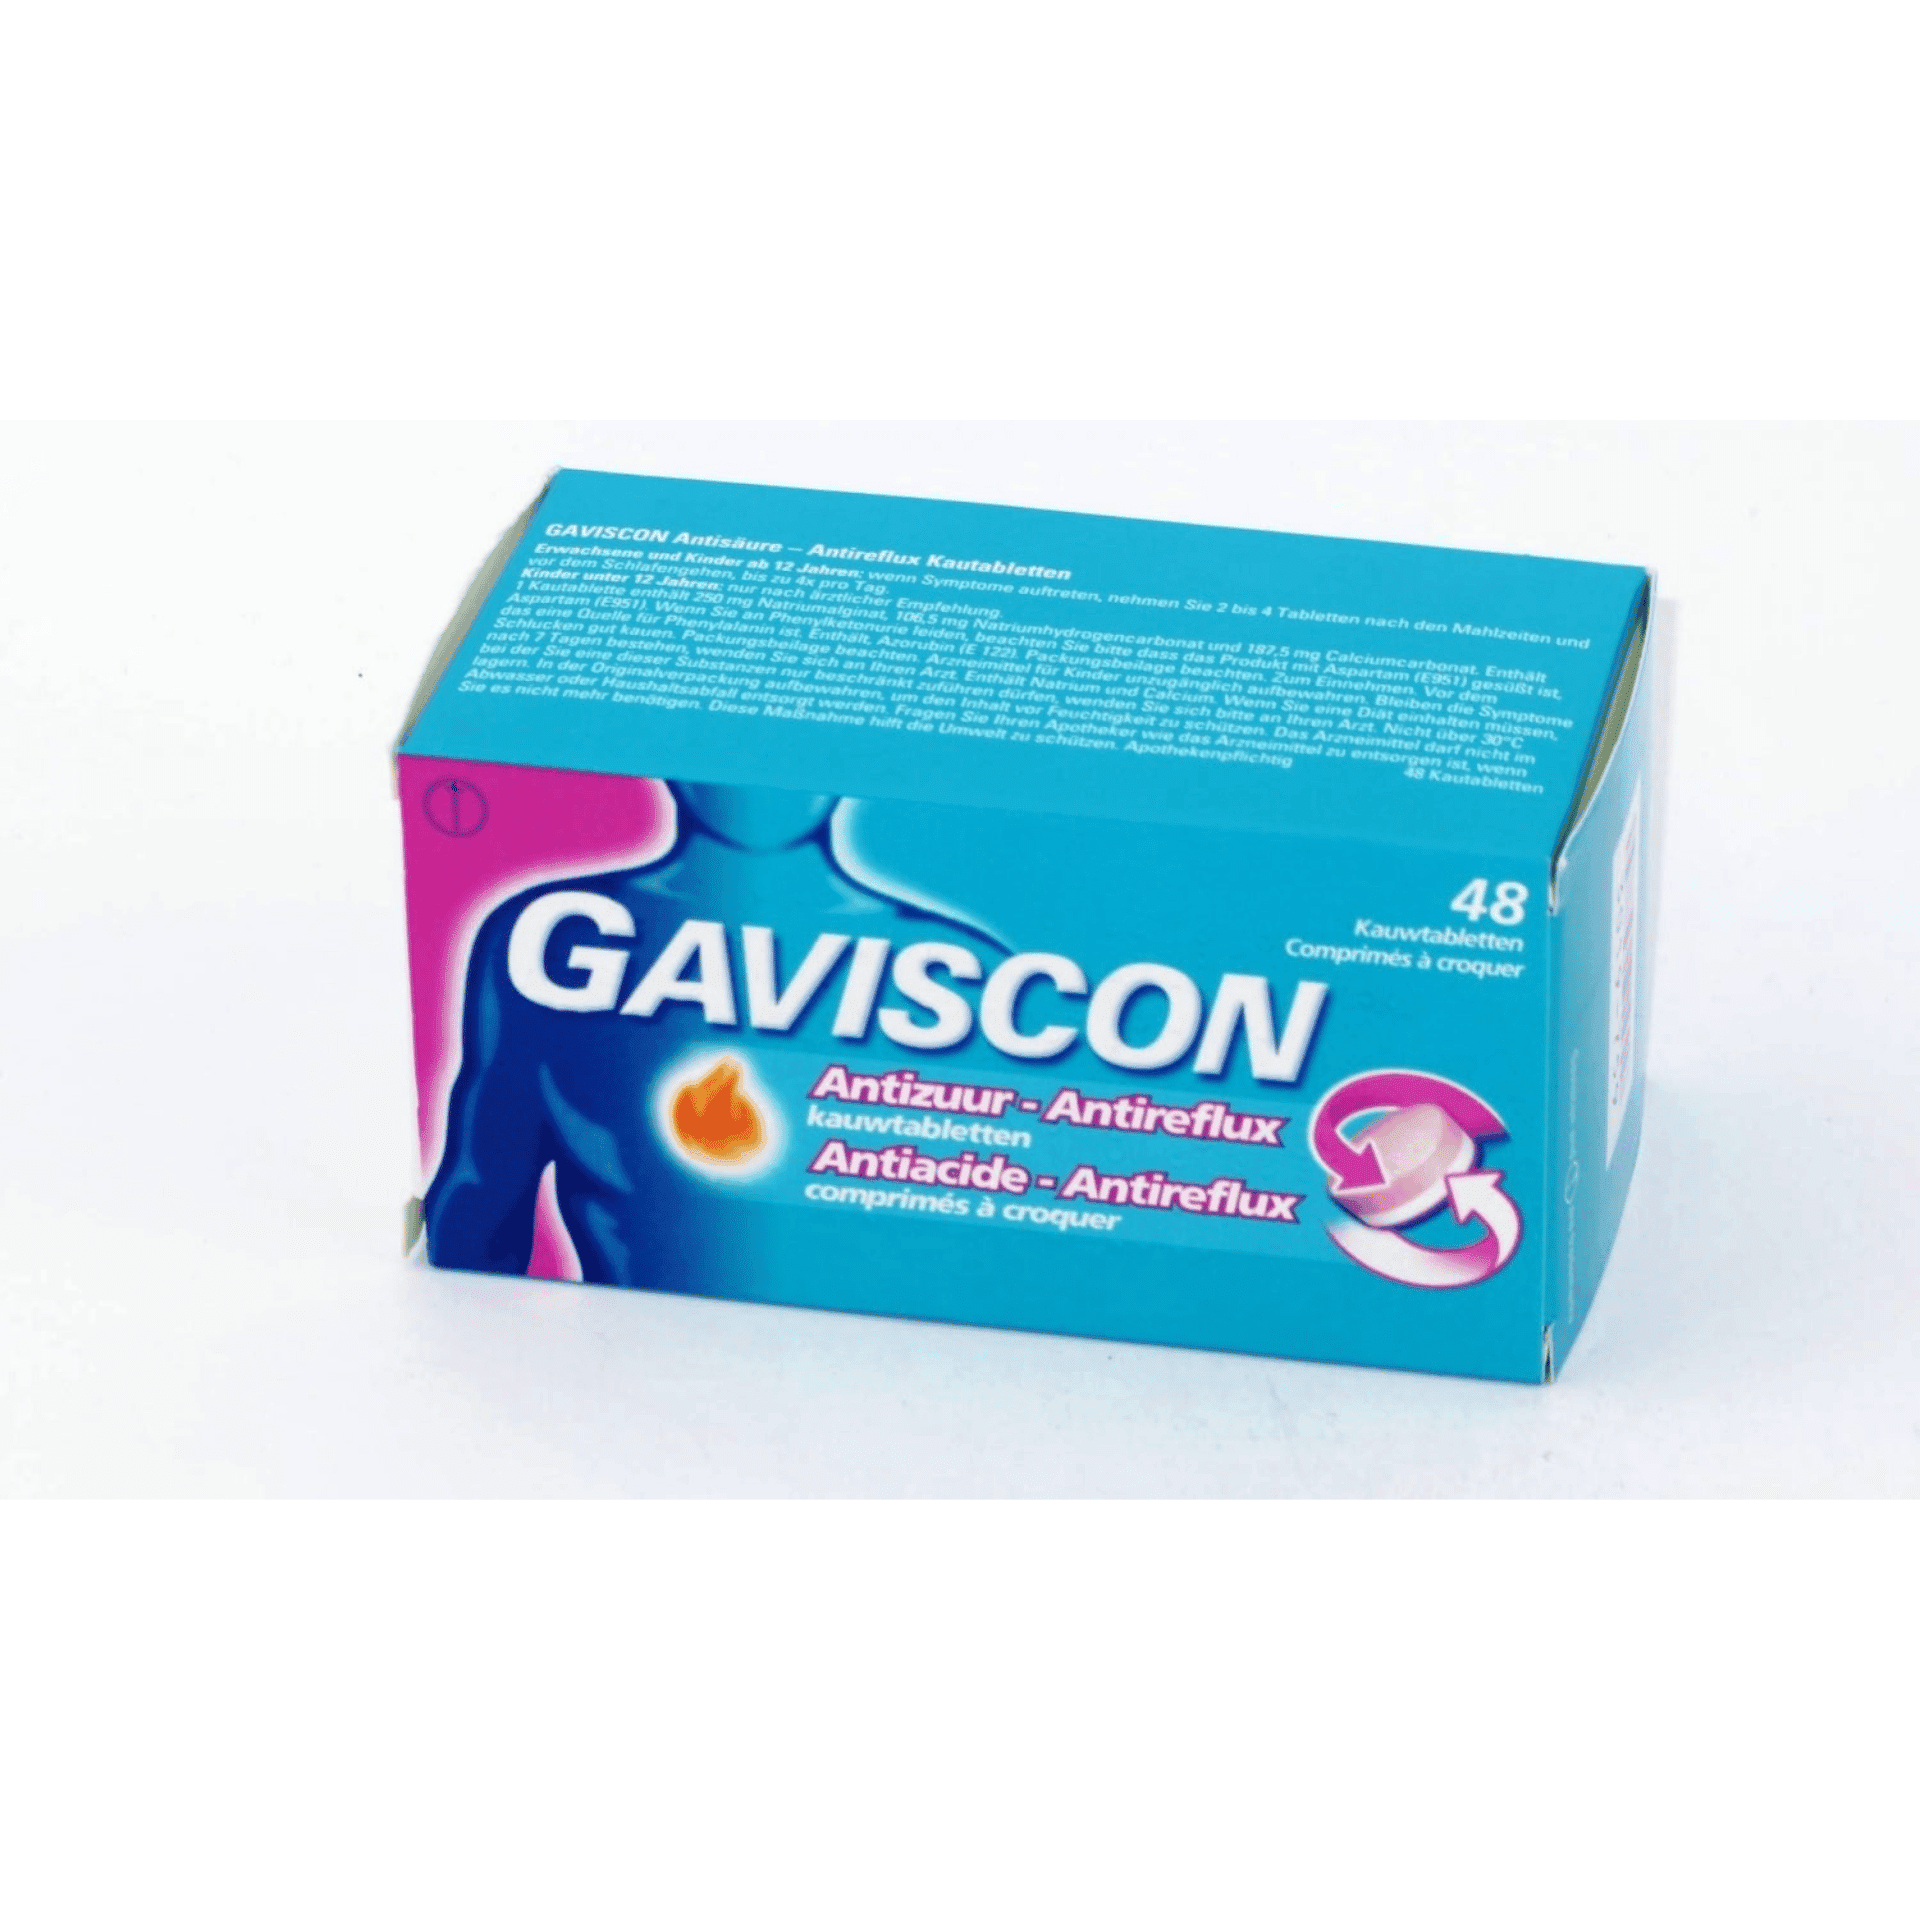 Gaviscon Antiacide-Antireflux 48 comprimés à croquer